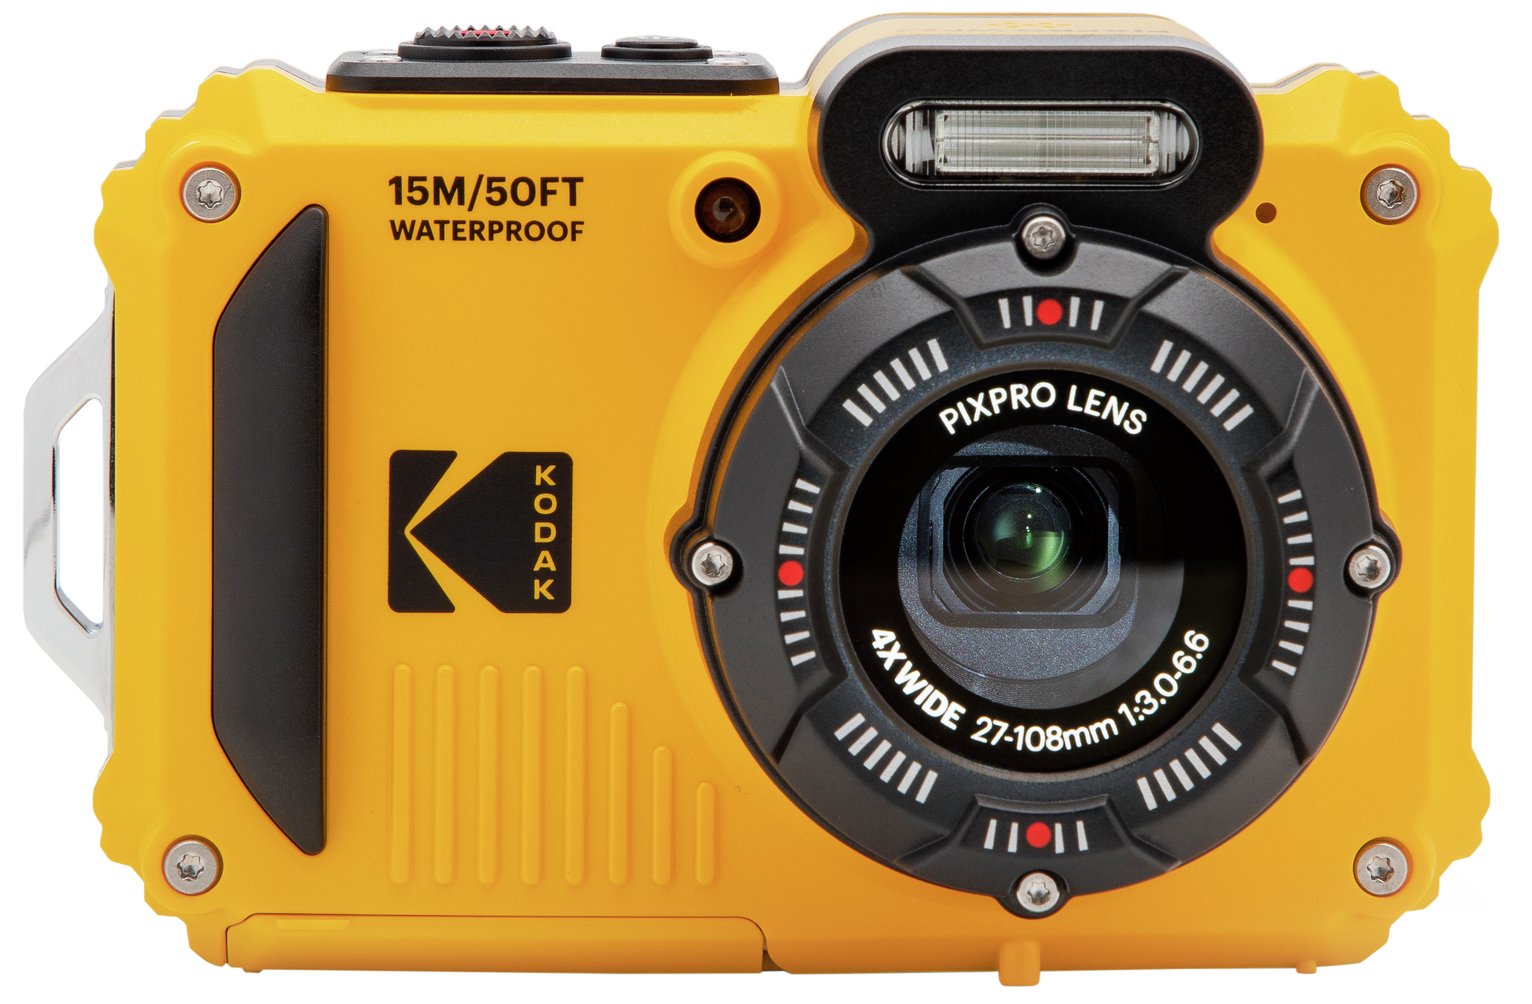 Kodak WPZ2 Waterproof Digital Camera Review